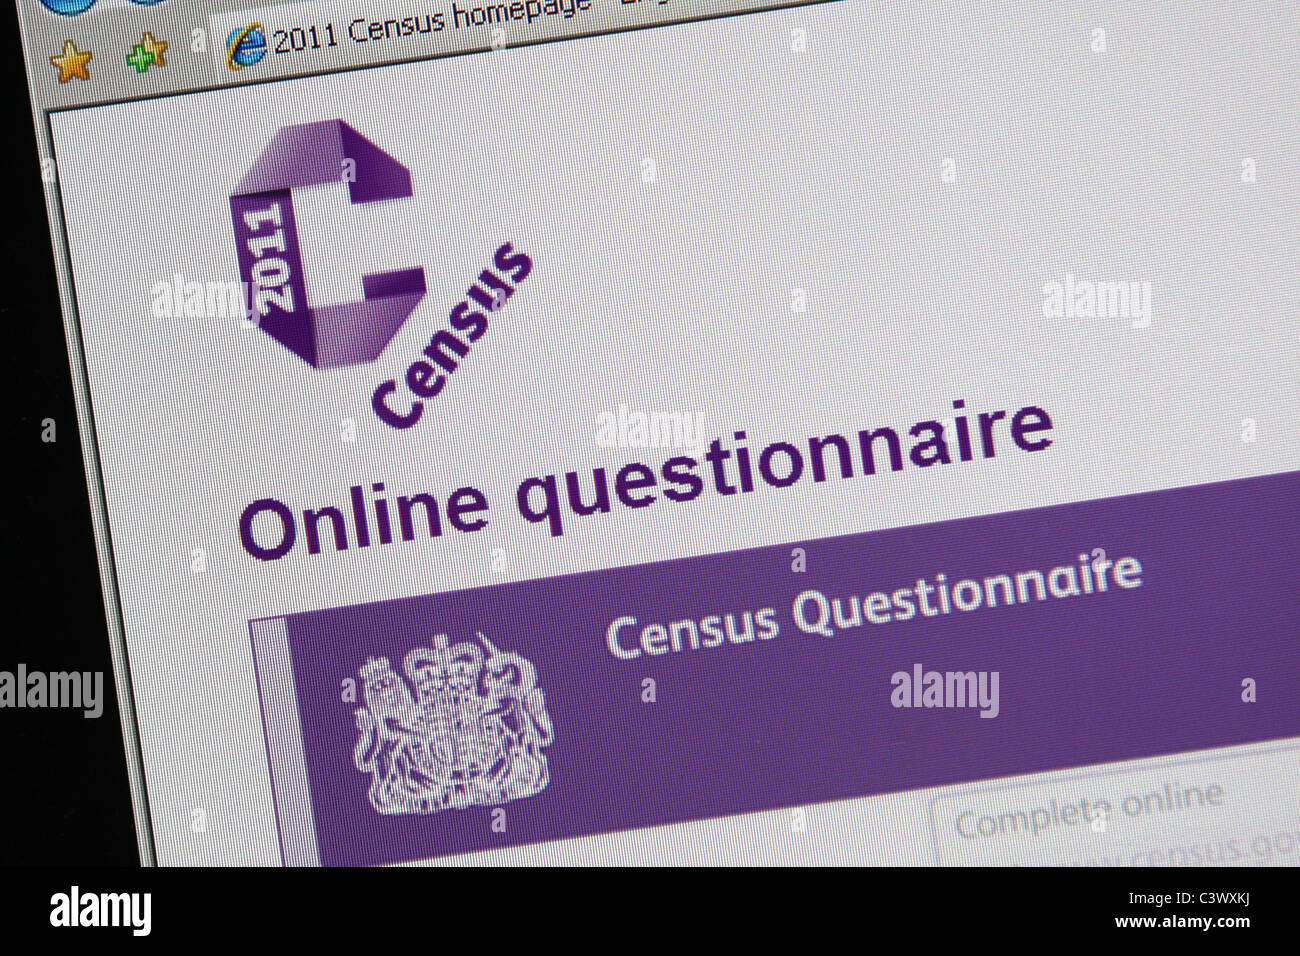 census form uk online questionnaire Stock Photo